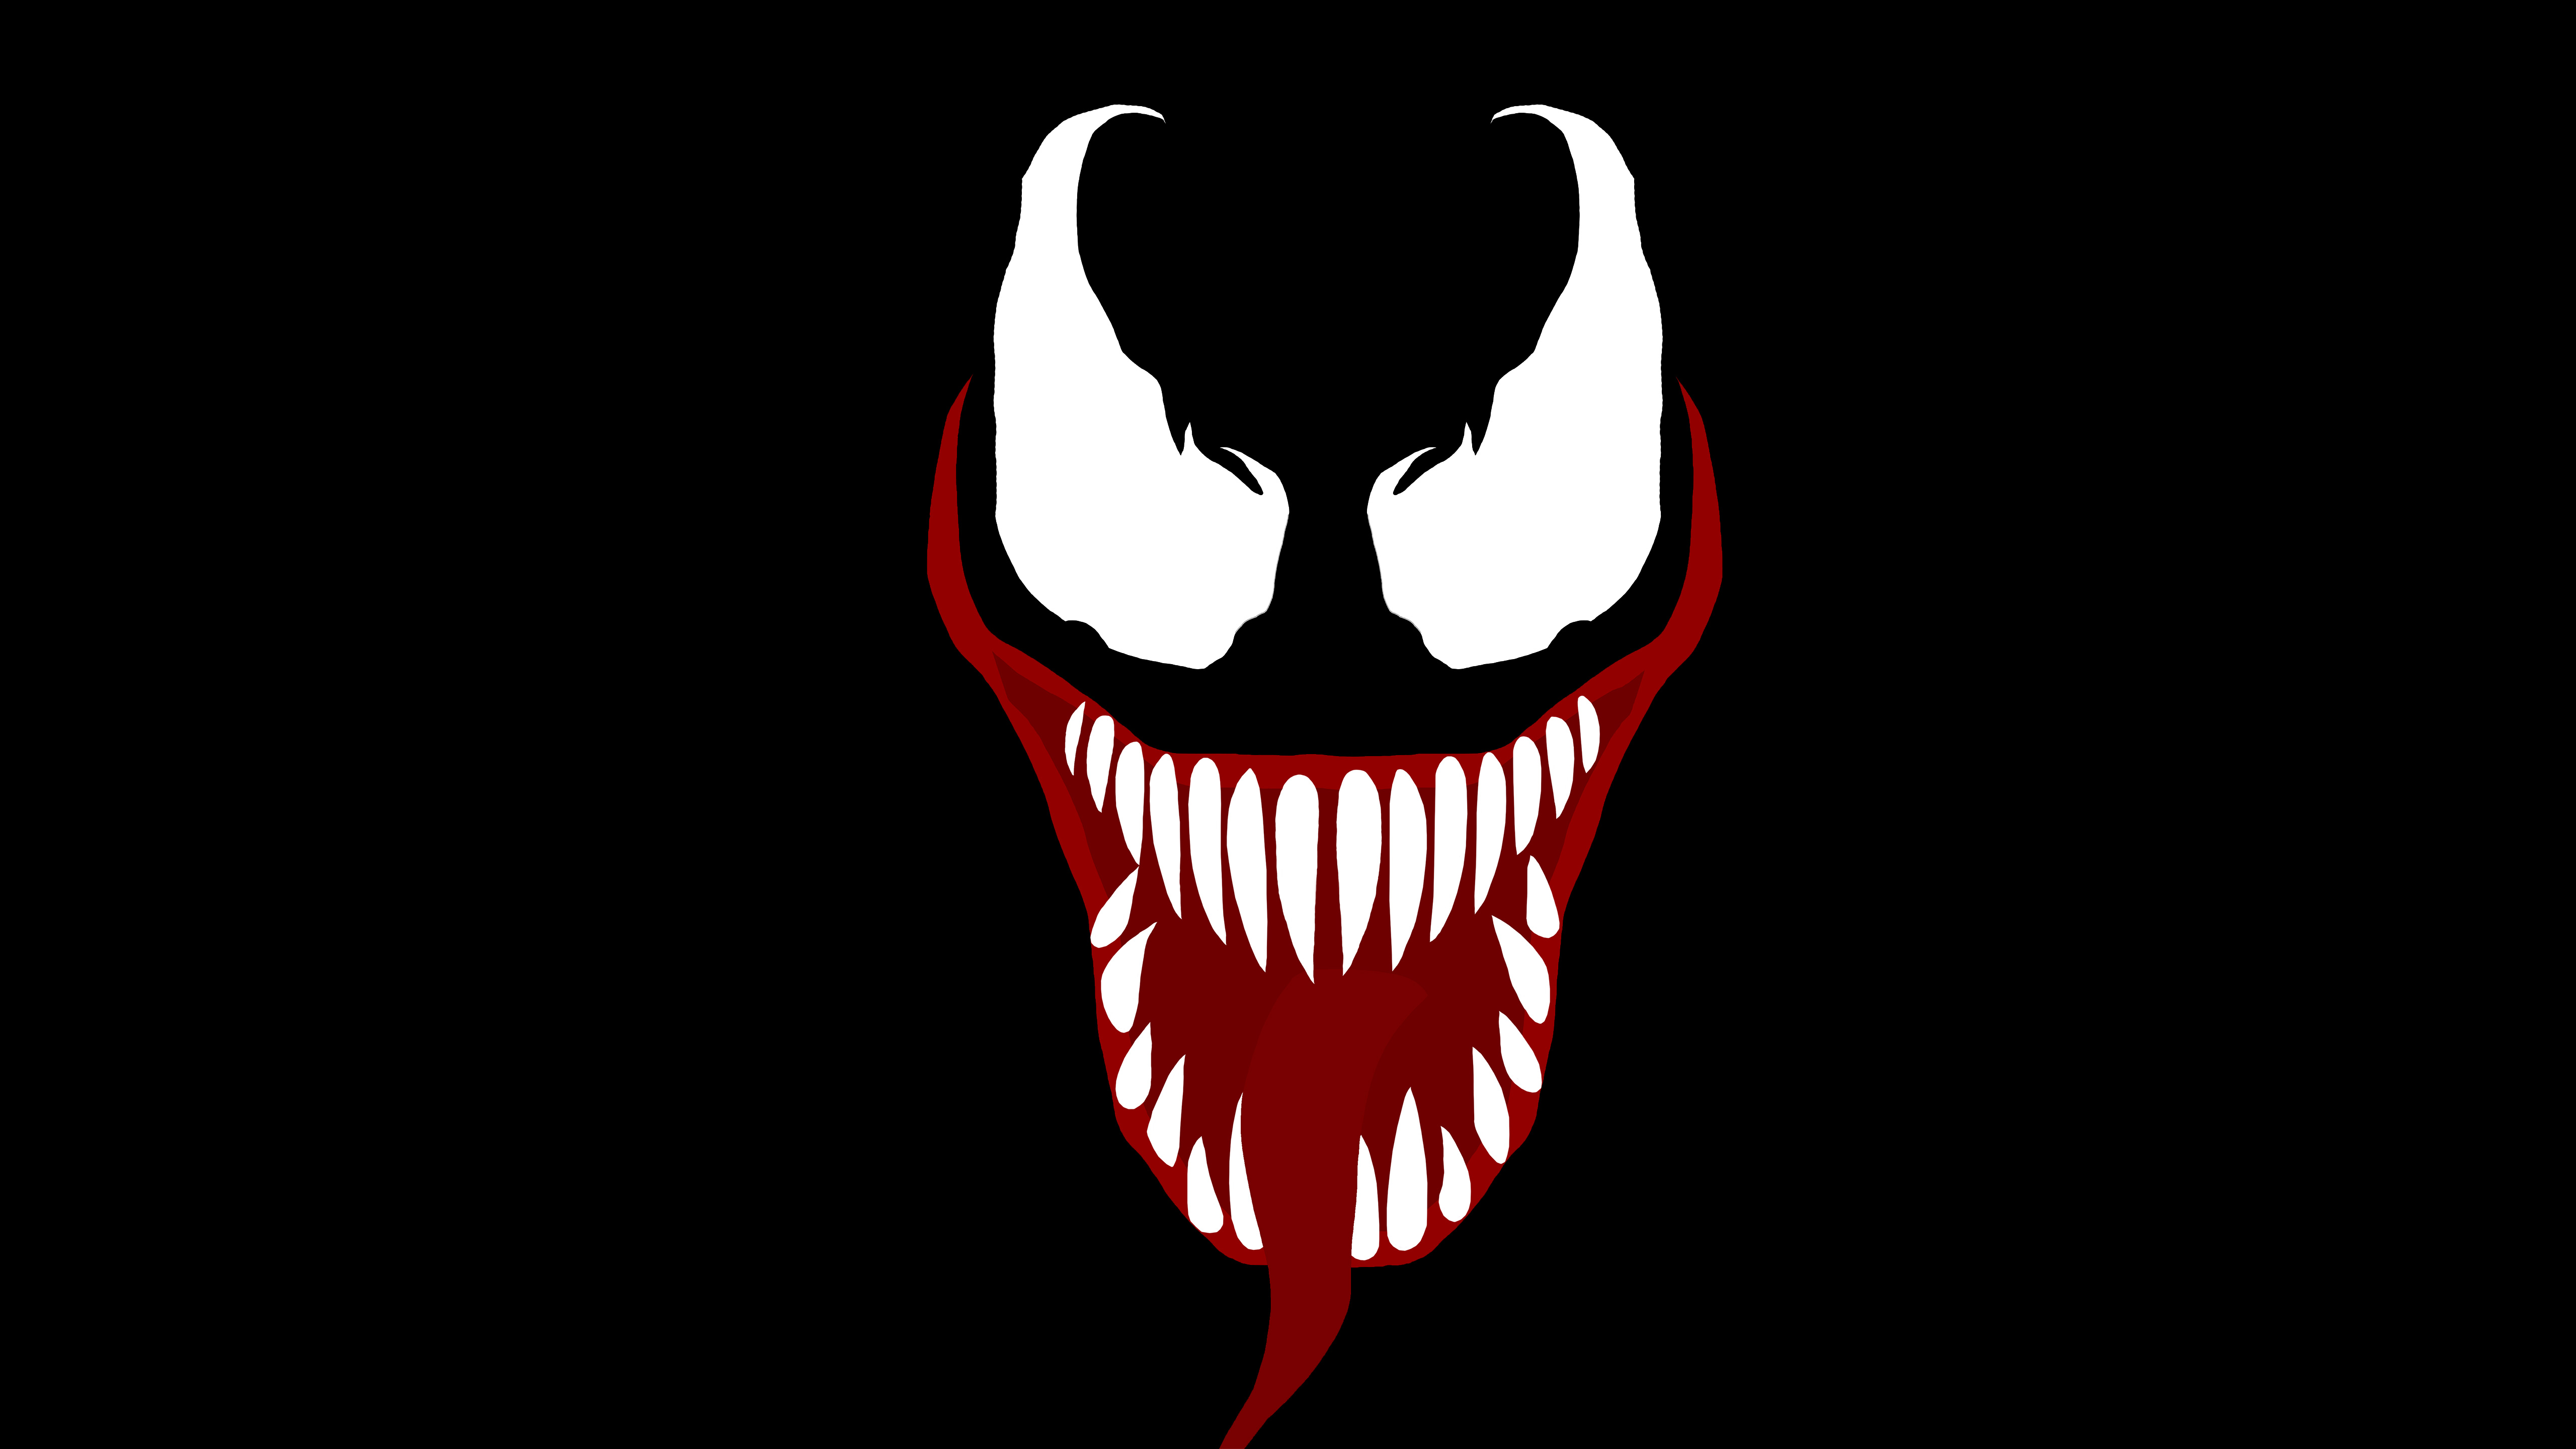 Venom Face Wallpapers   Top Venom Face Backgrounds 5120x2880